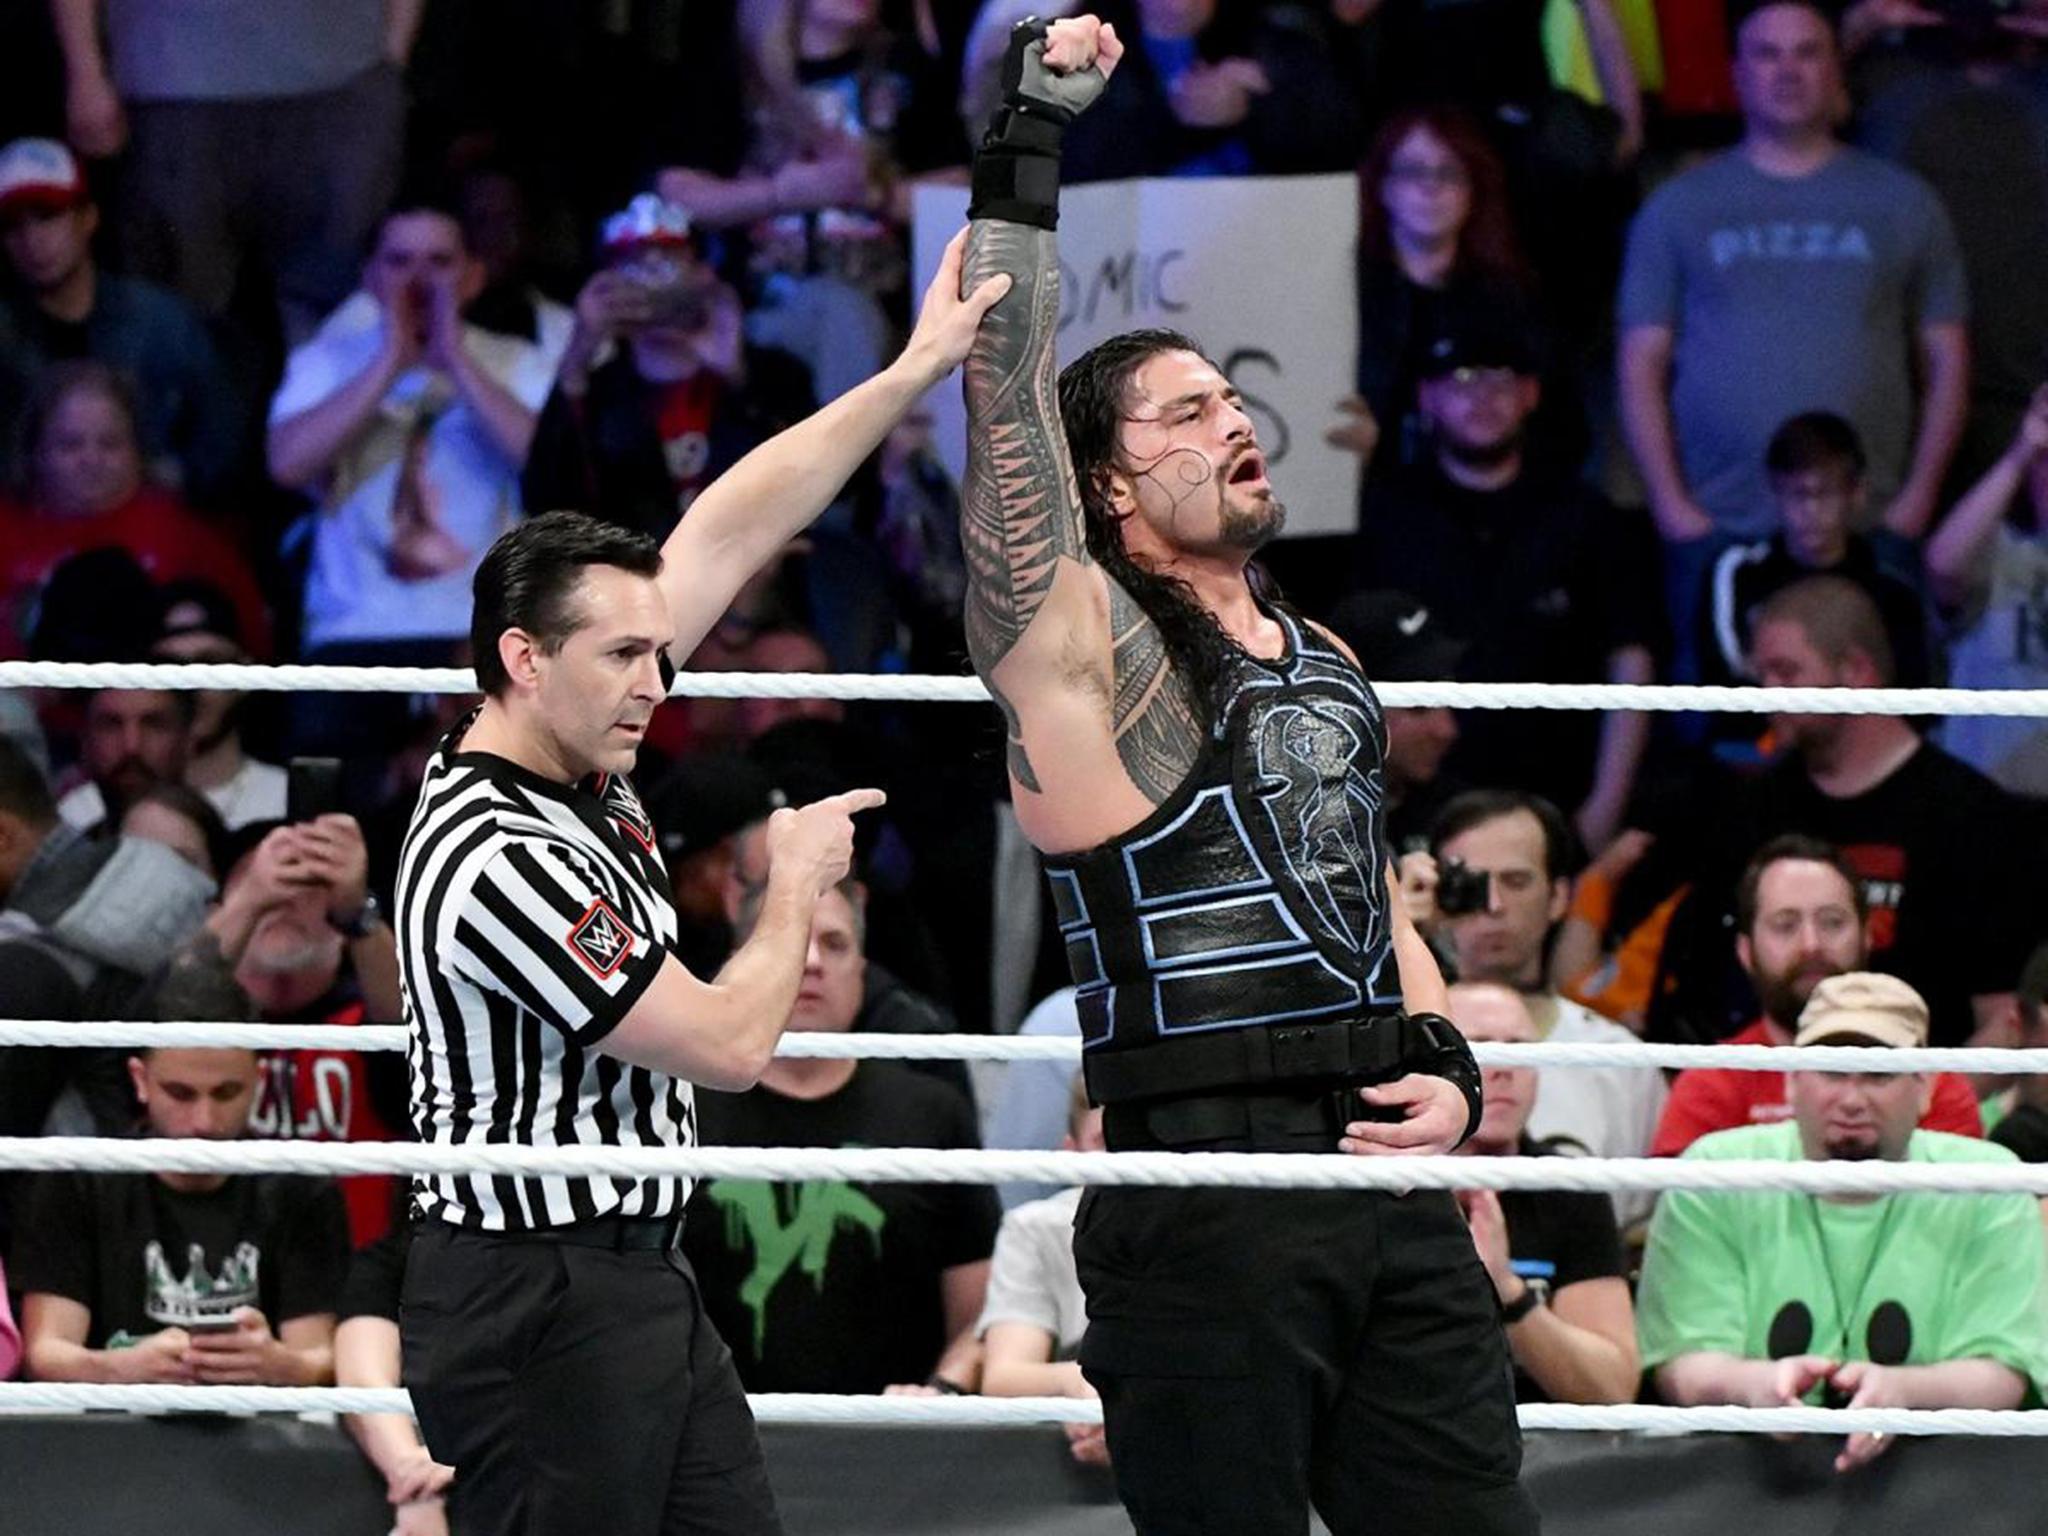 WWE continue to push Reigns despite the fans' displeasure